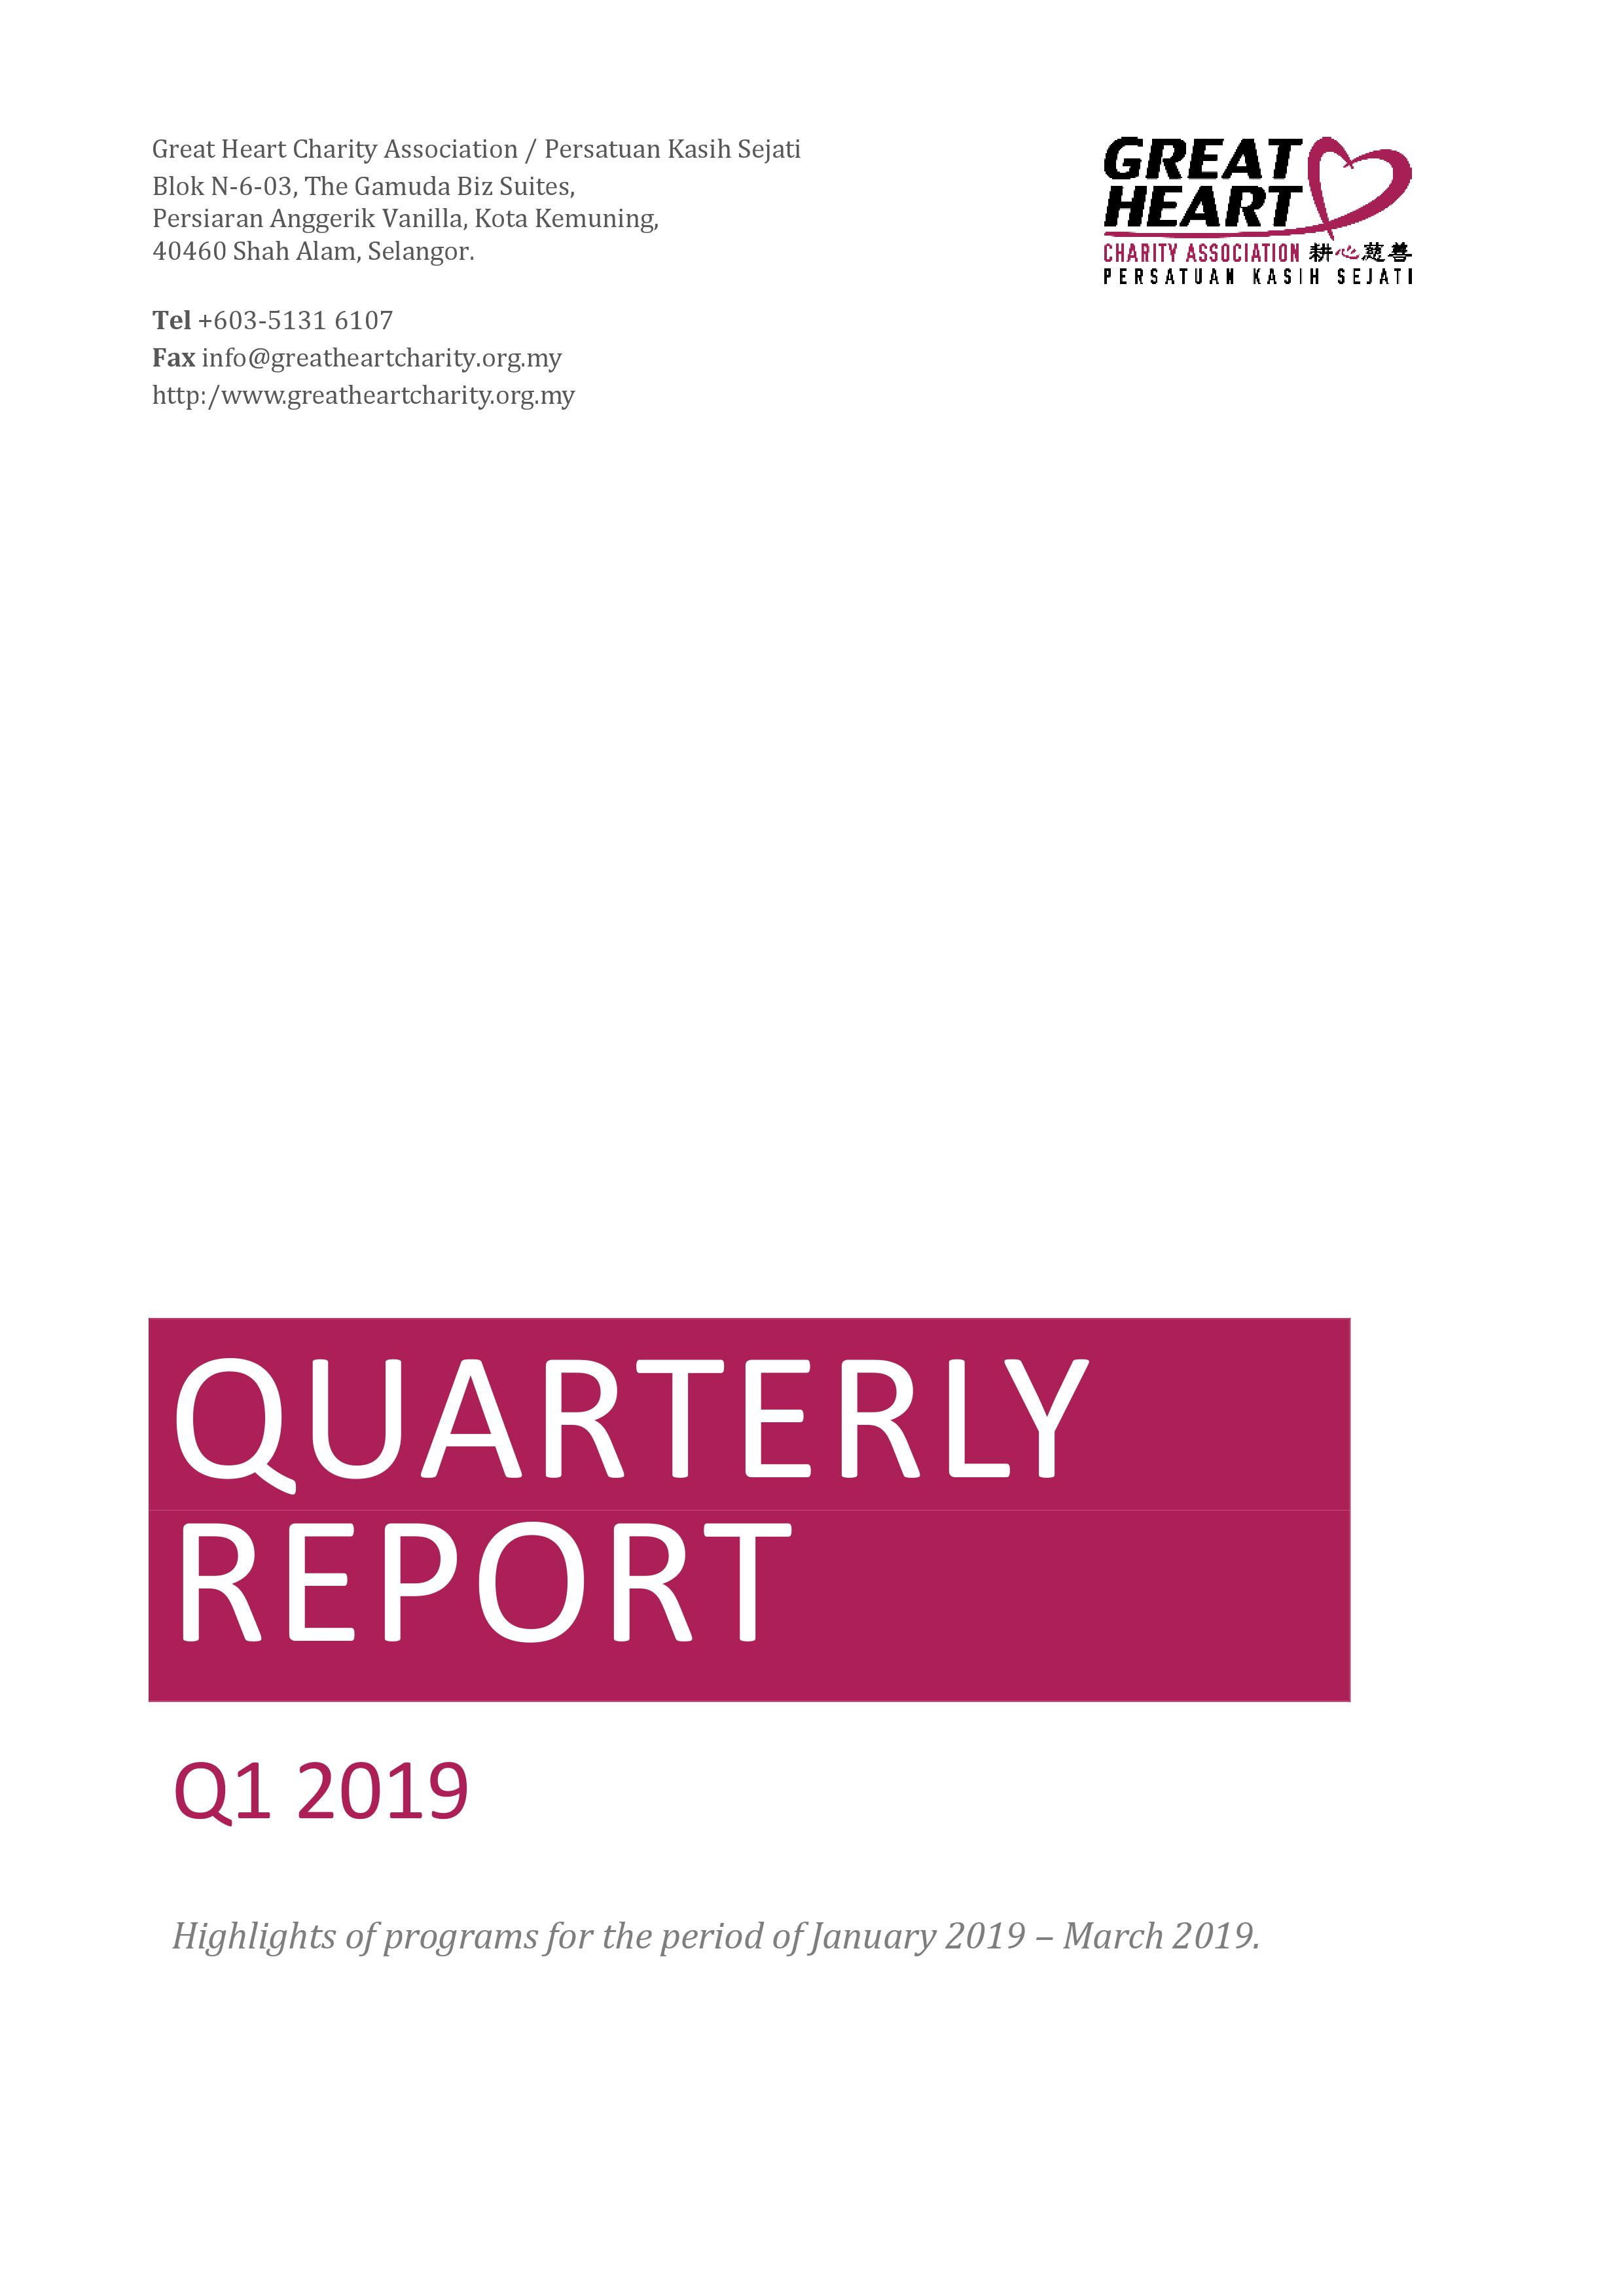 Great Heart Quarterly Report - Quarter 1 - 2019